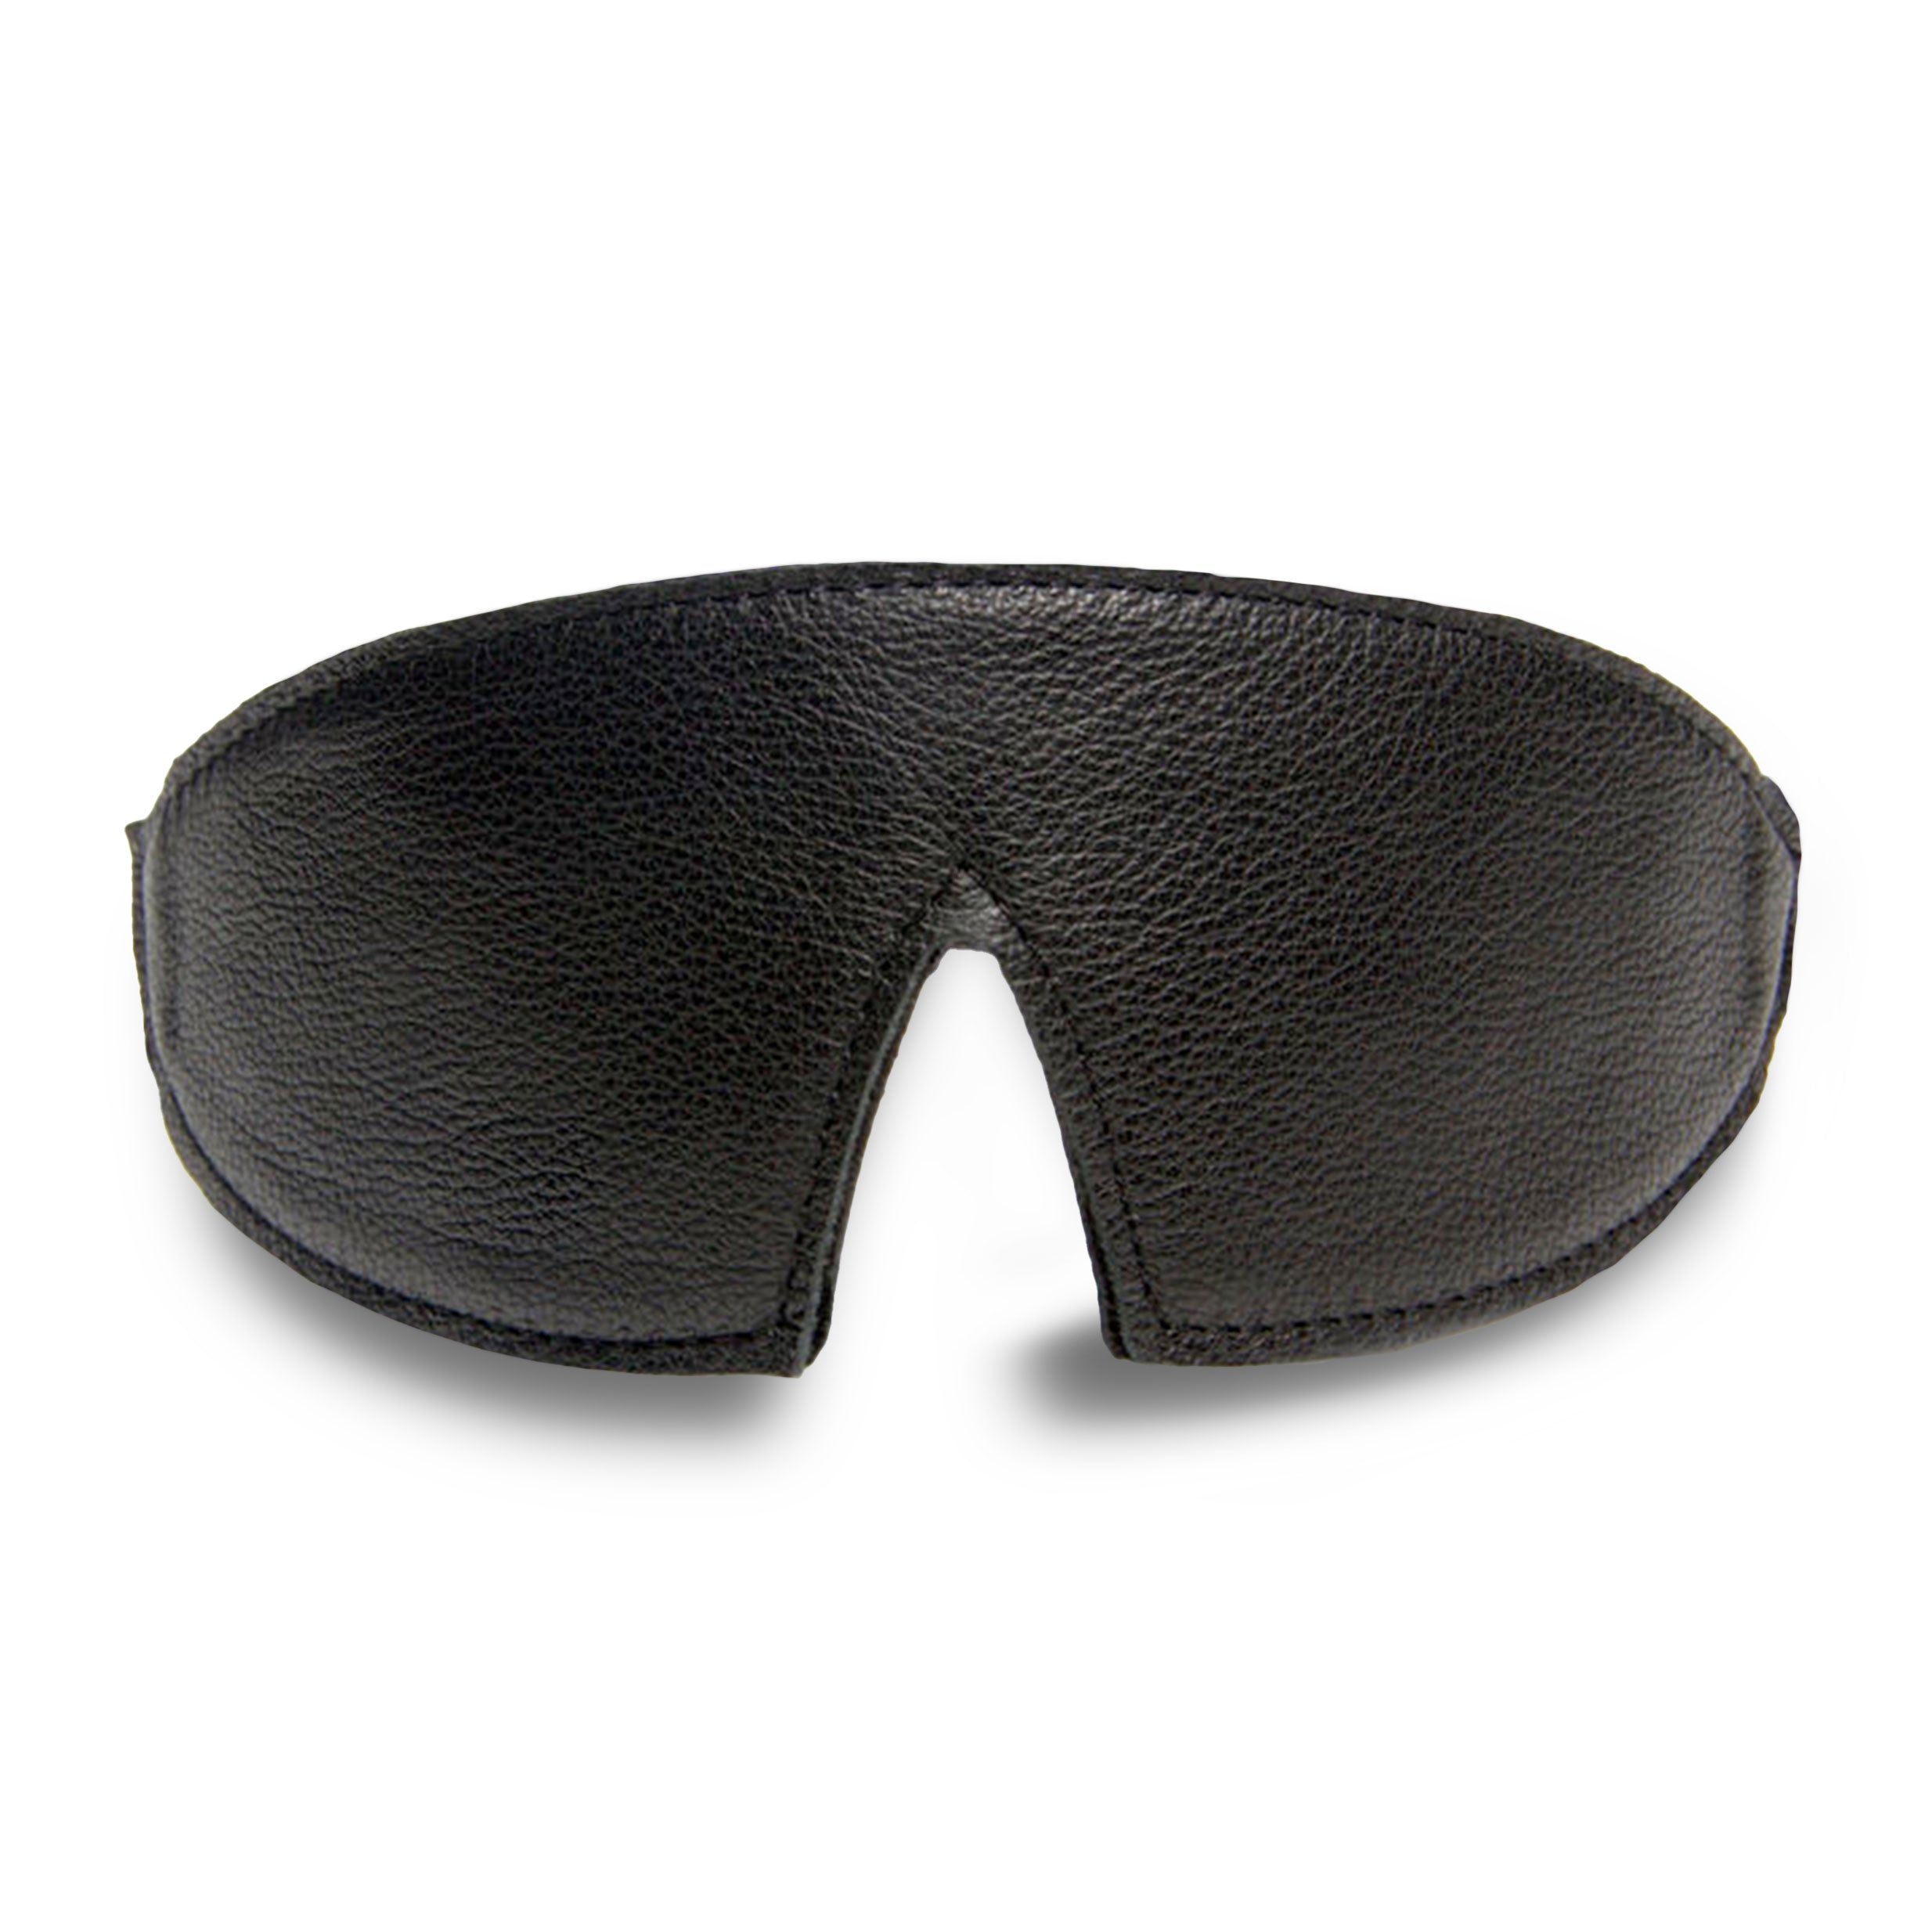 Berlin Pointy Leather Bondage Blindfold